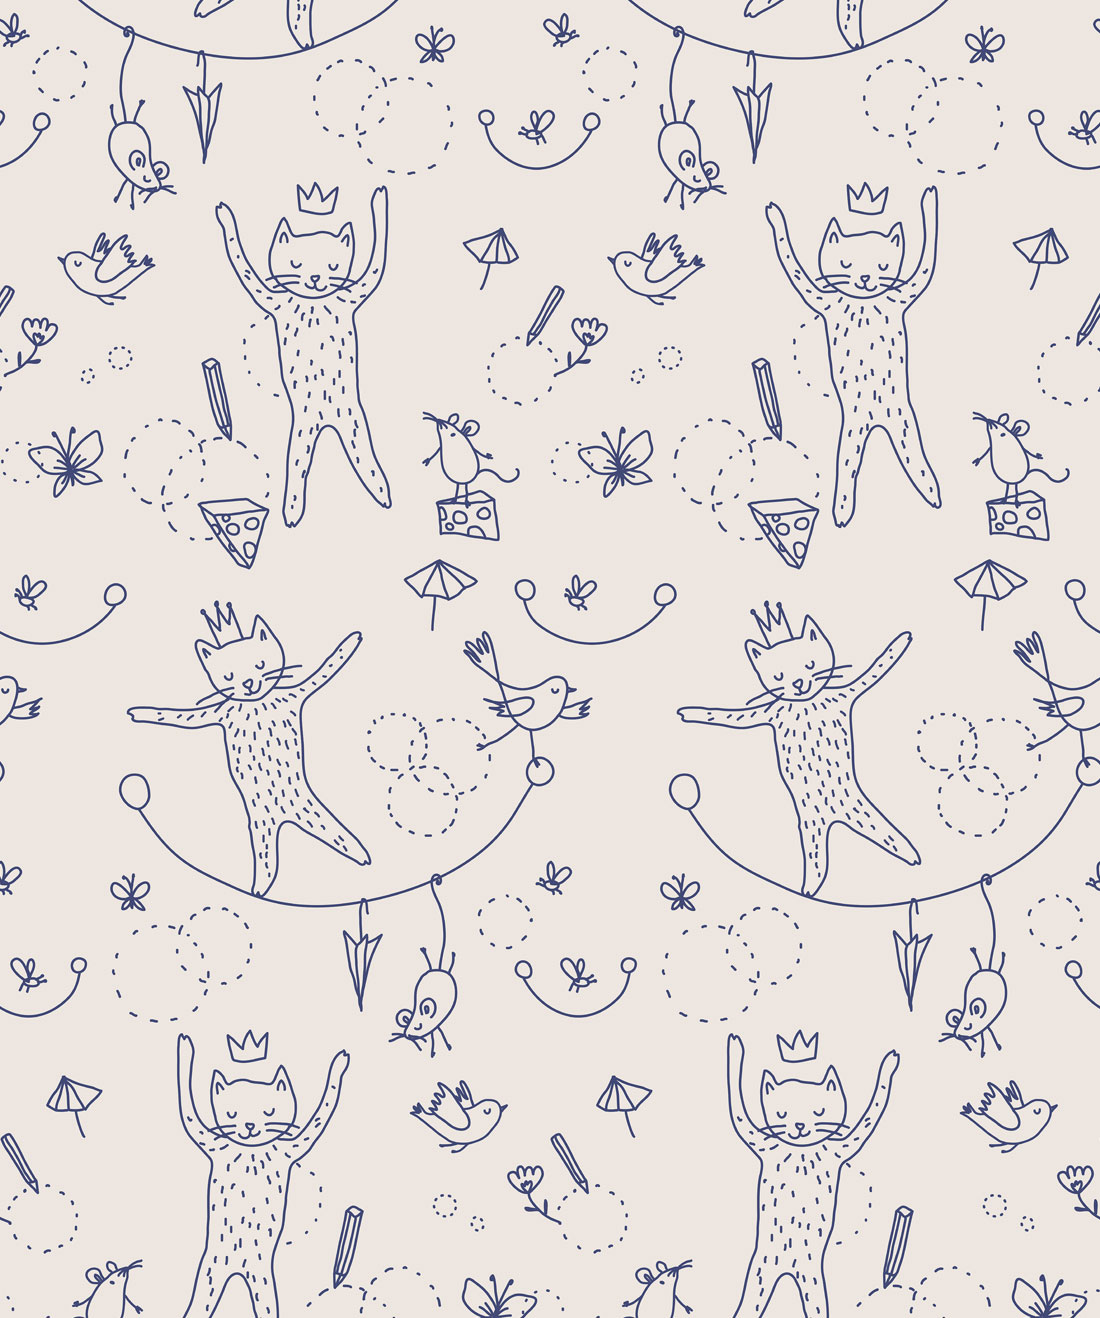 Mice Cats Wallpaper Gorgeously Soft Playful Milton King Aus